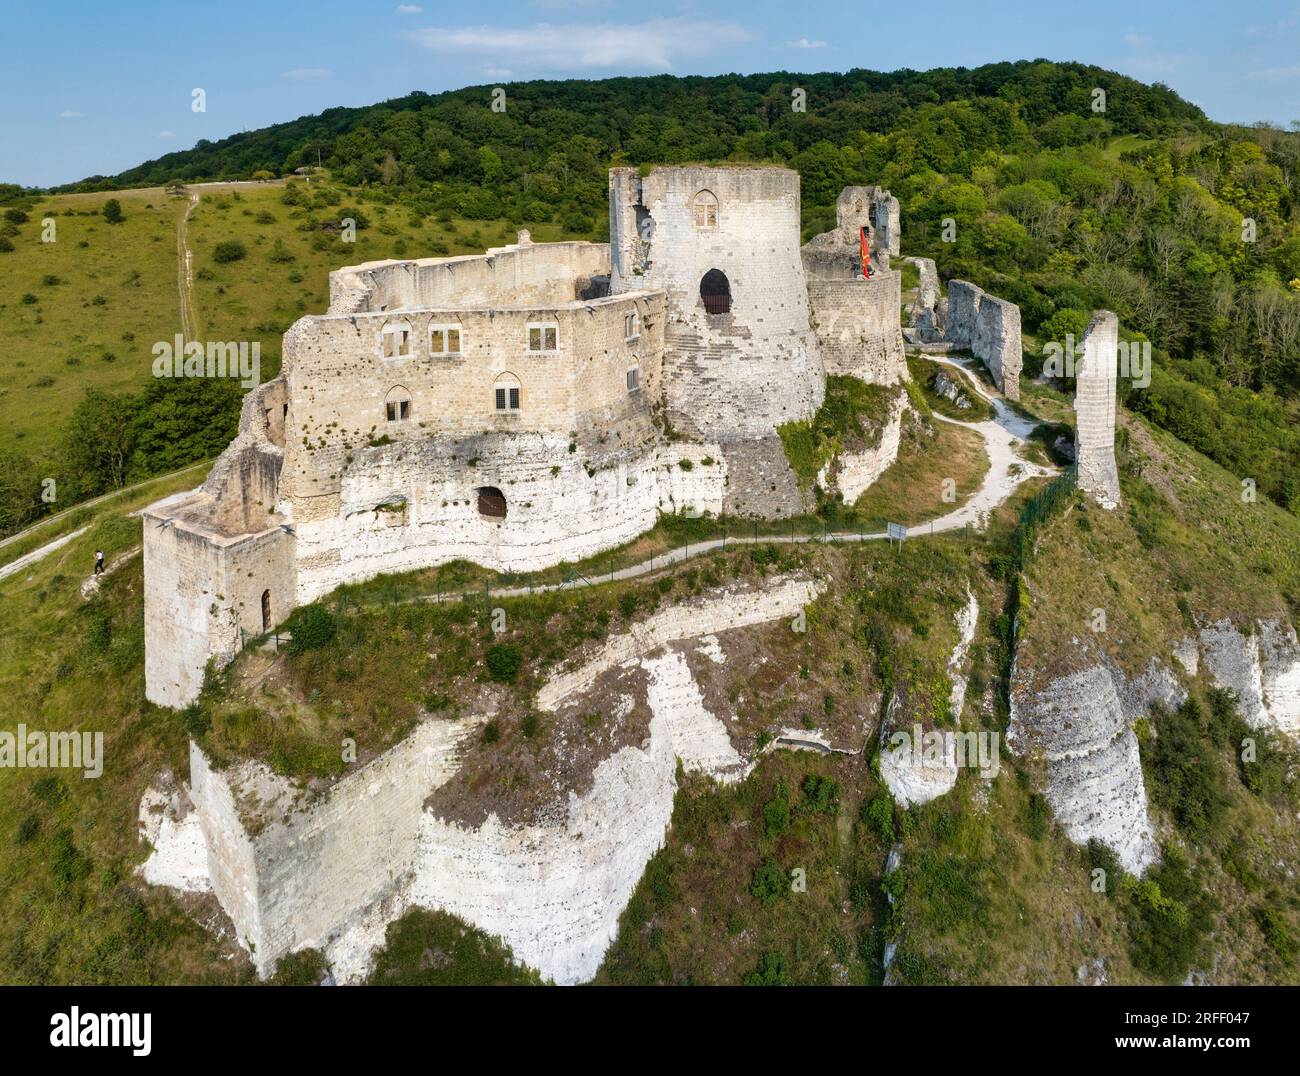 France, Eure, Les Andelys, Chateau Gaillard, 12th century fortress built by Richard Coeur de Lion, Seine valley (aerial view) Stock Photo